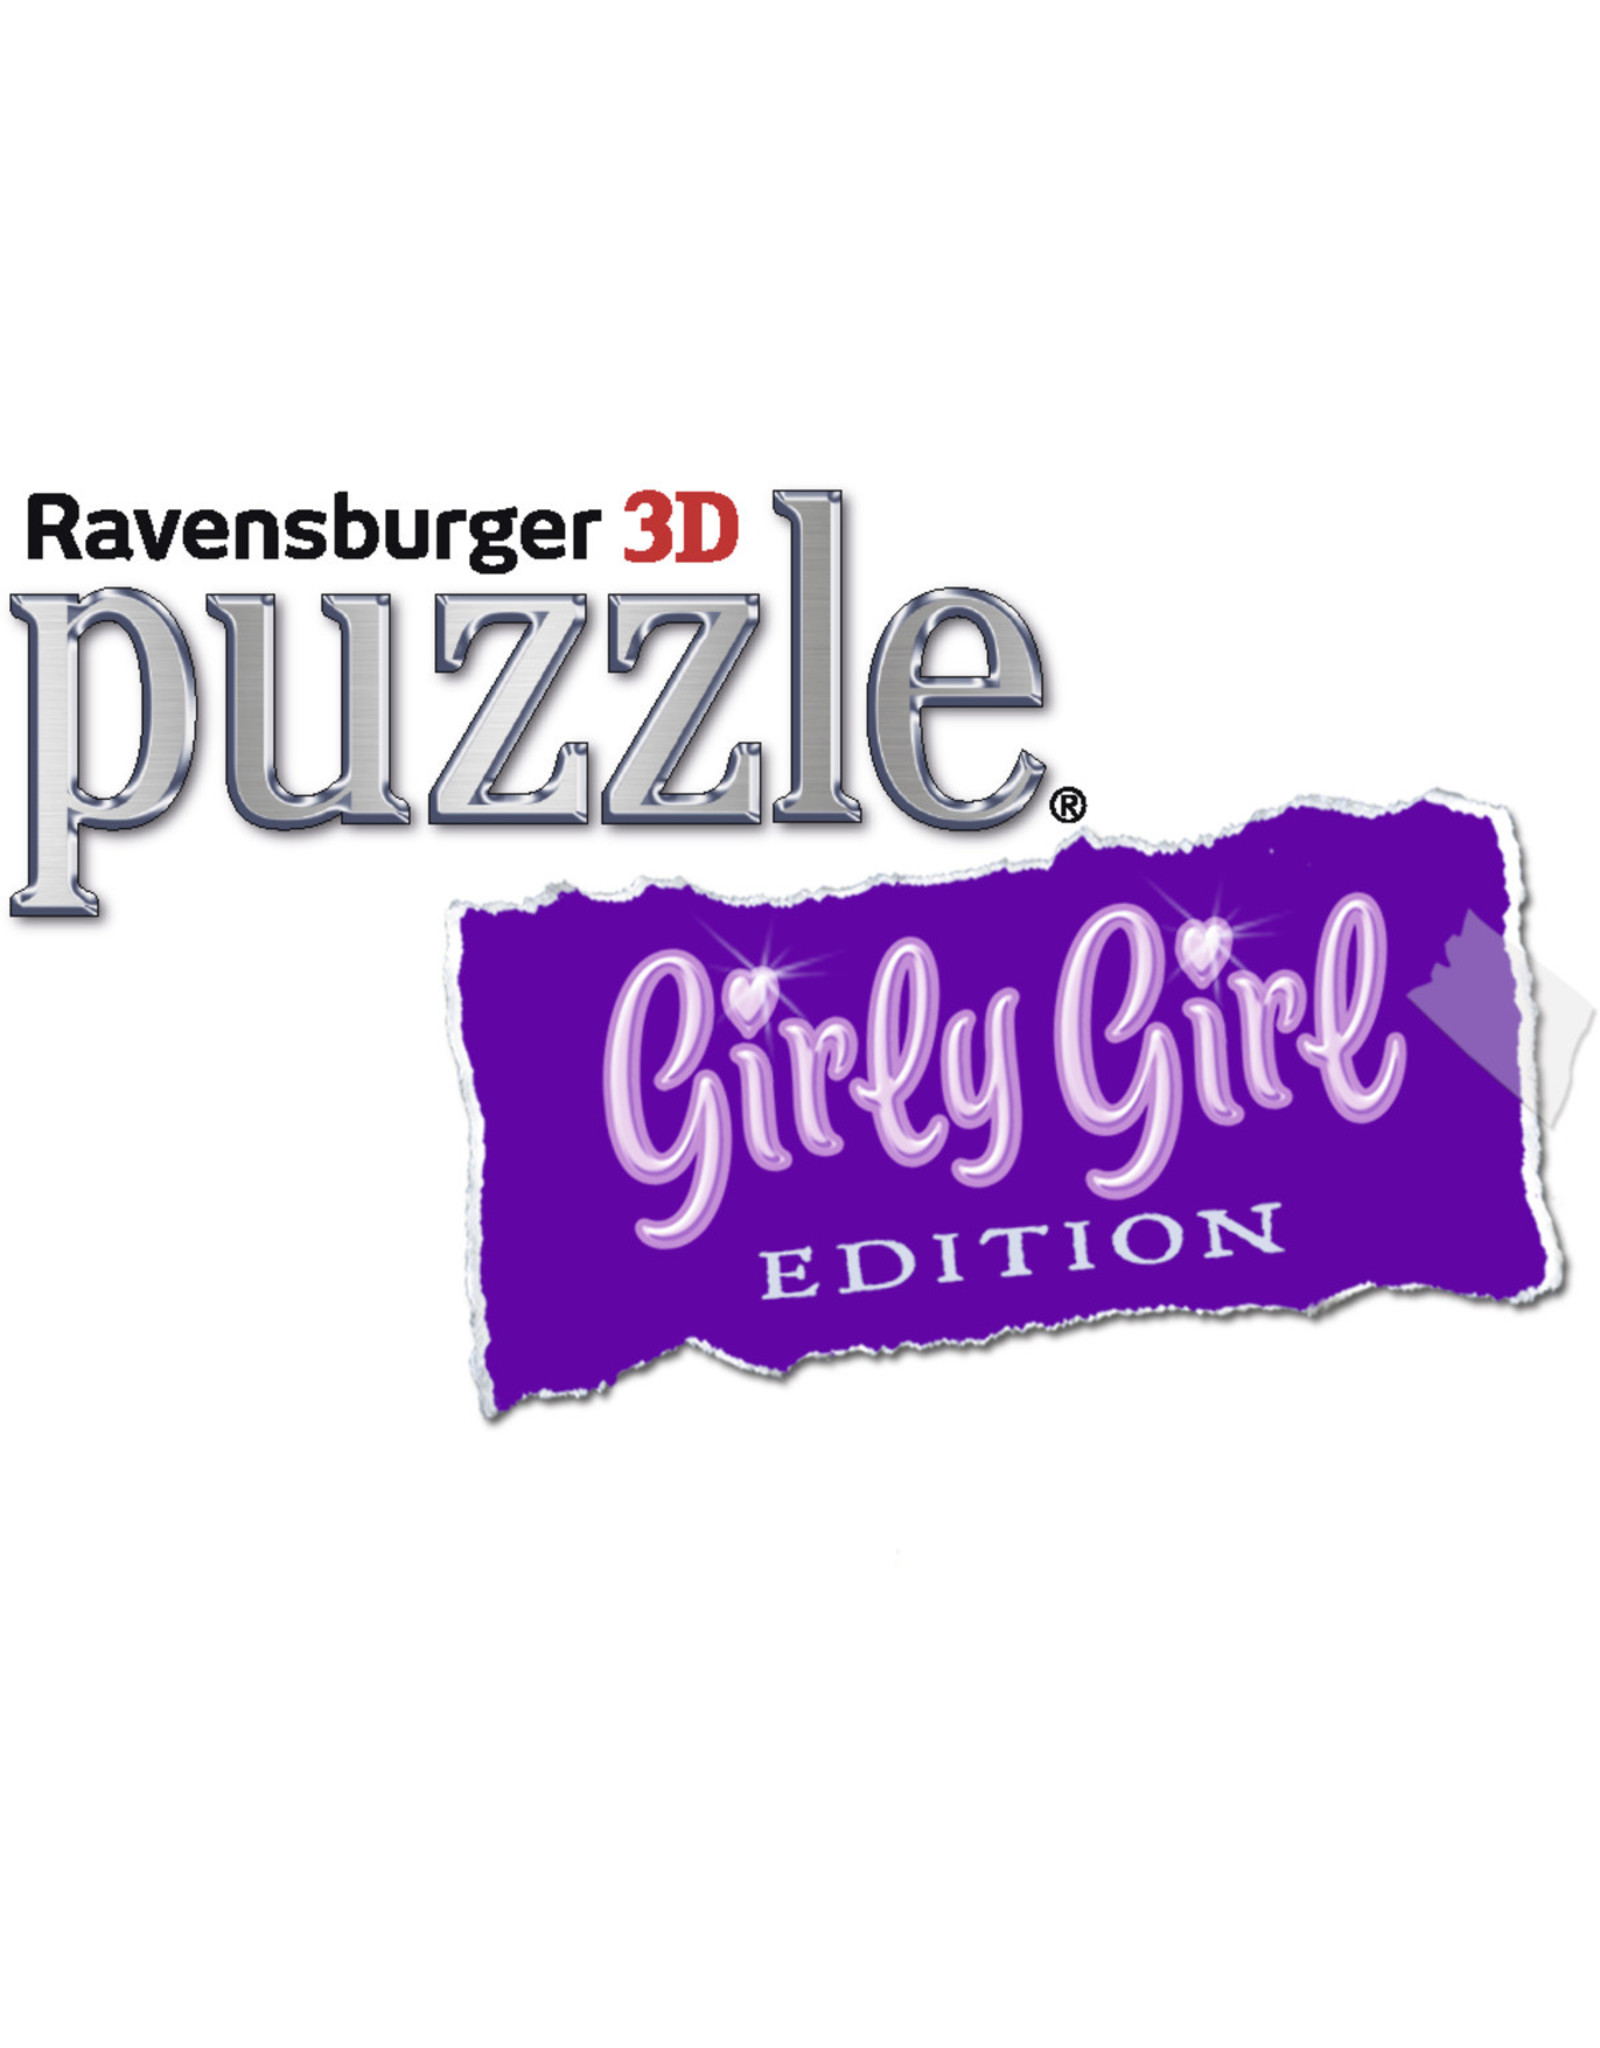 Ravensburger Ravensburger 3D Puzzel 120529  Bloemenvaas Girly Girl Edition Paard - 216 Stukjes